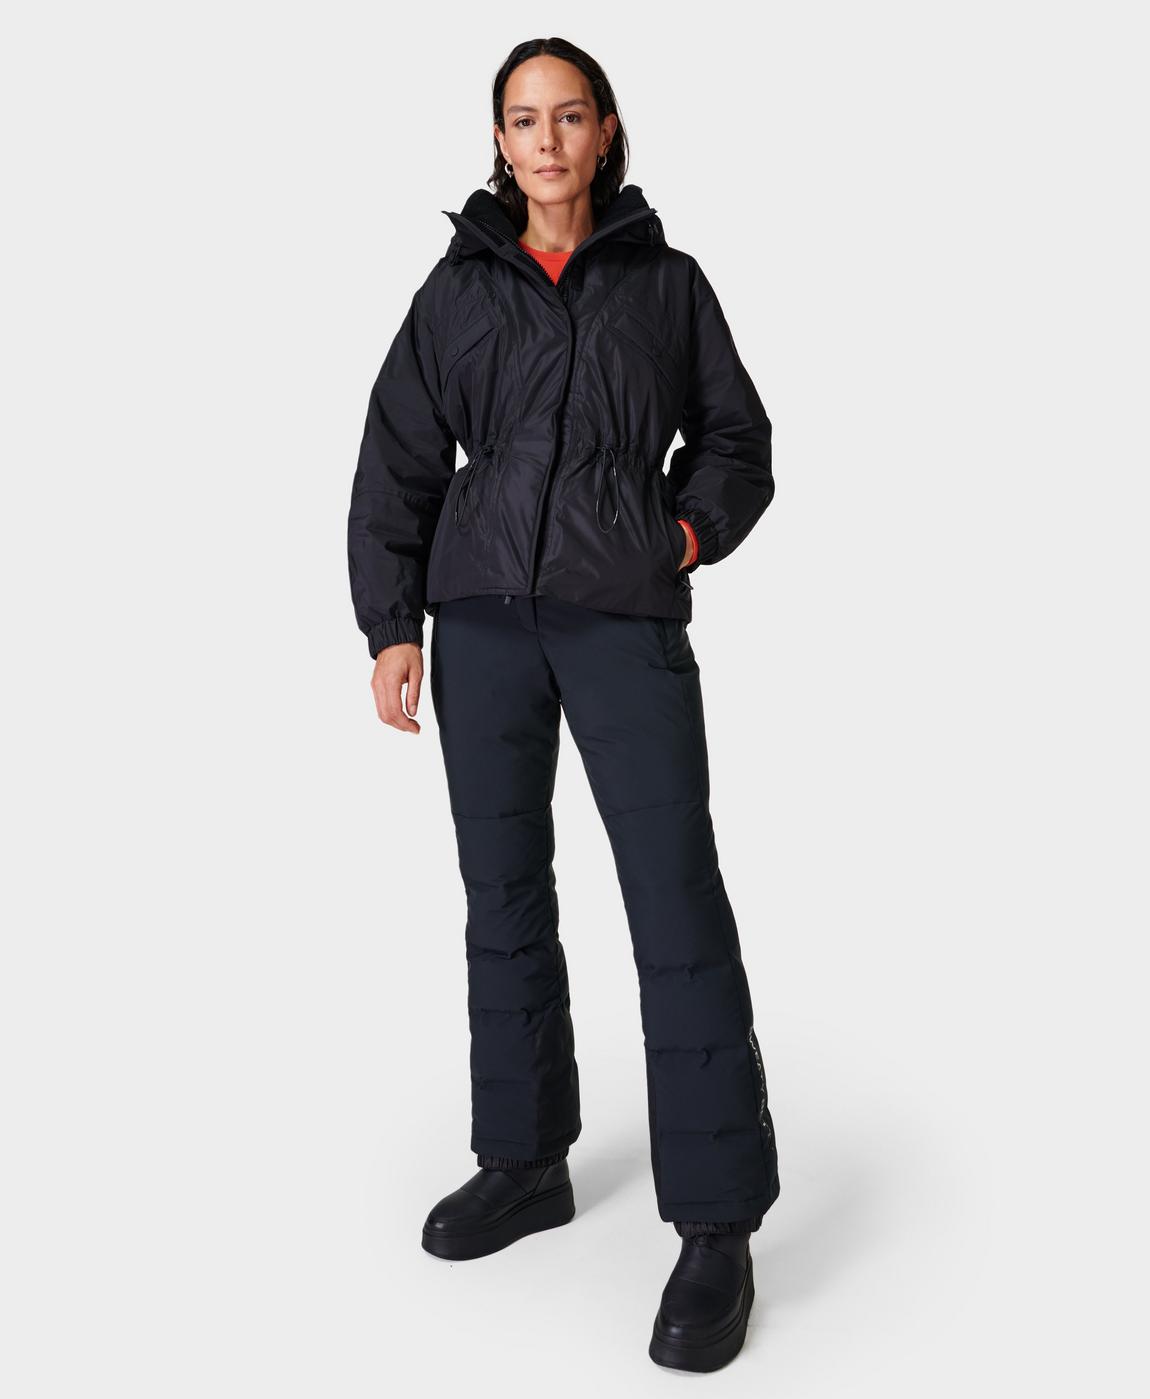 Arctic Ski Jacket - Black, Women's Ski Clothes